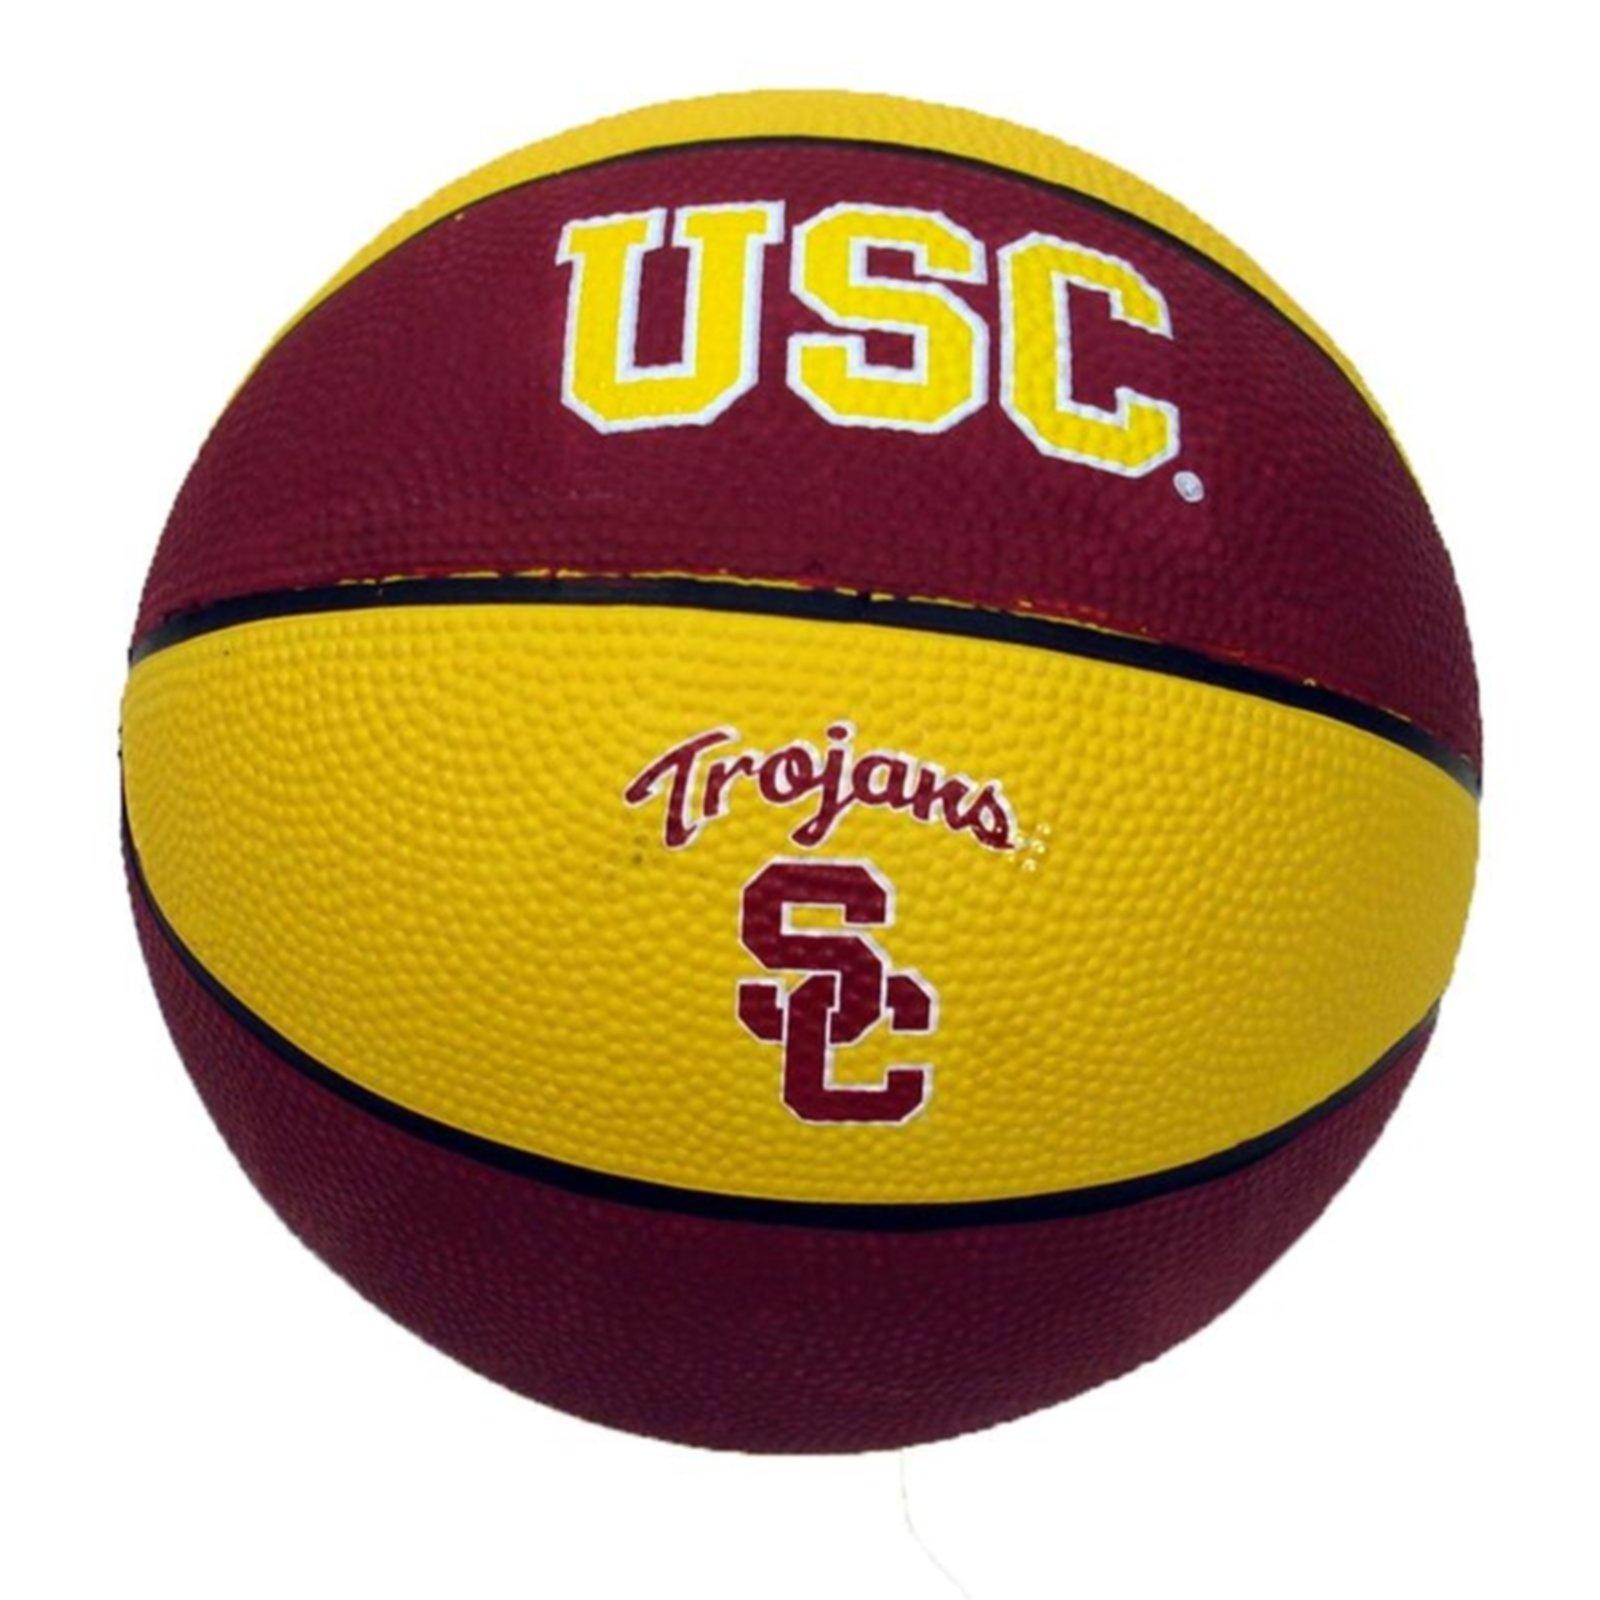 USC Block Rubber Basketball Mini image01